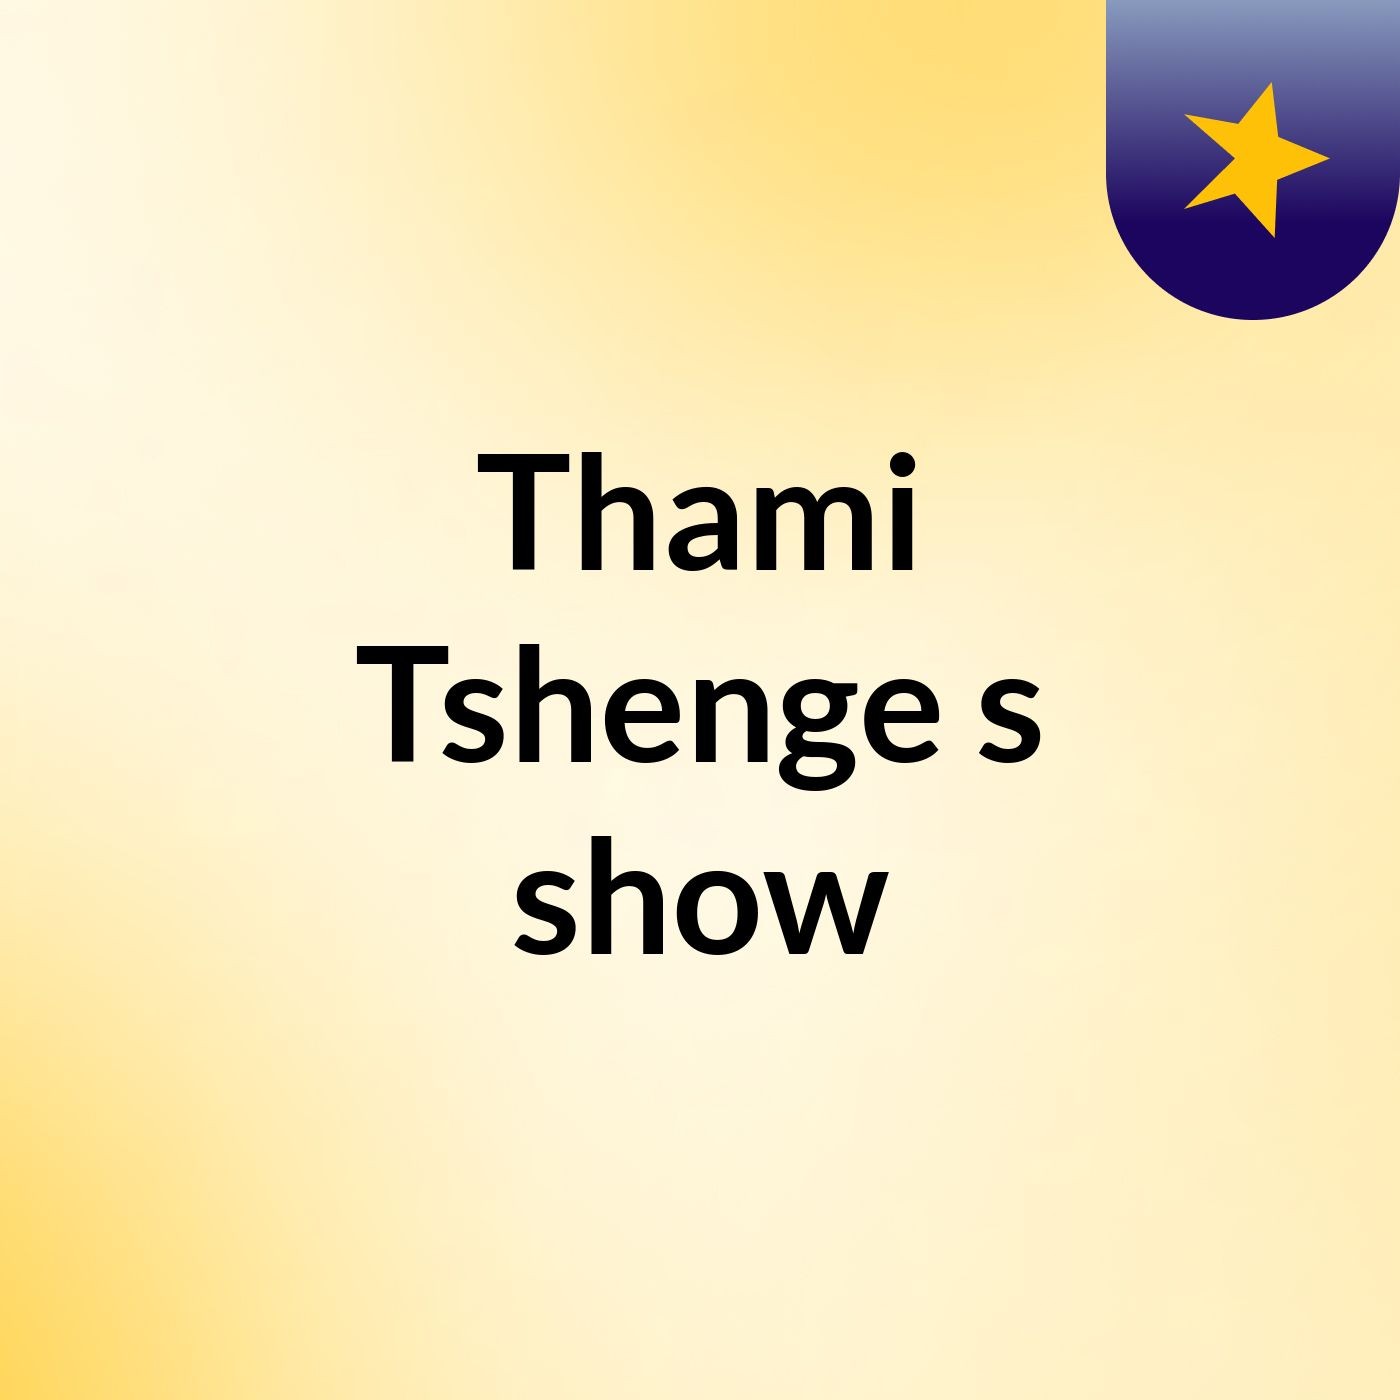 Thami Tshenge's show